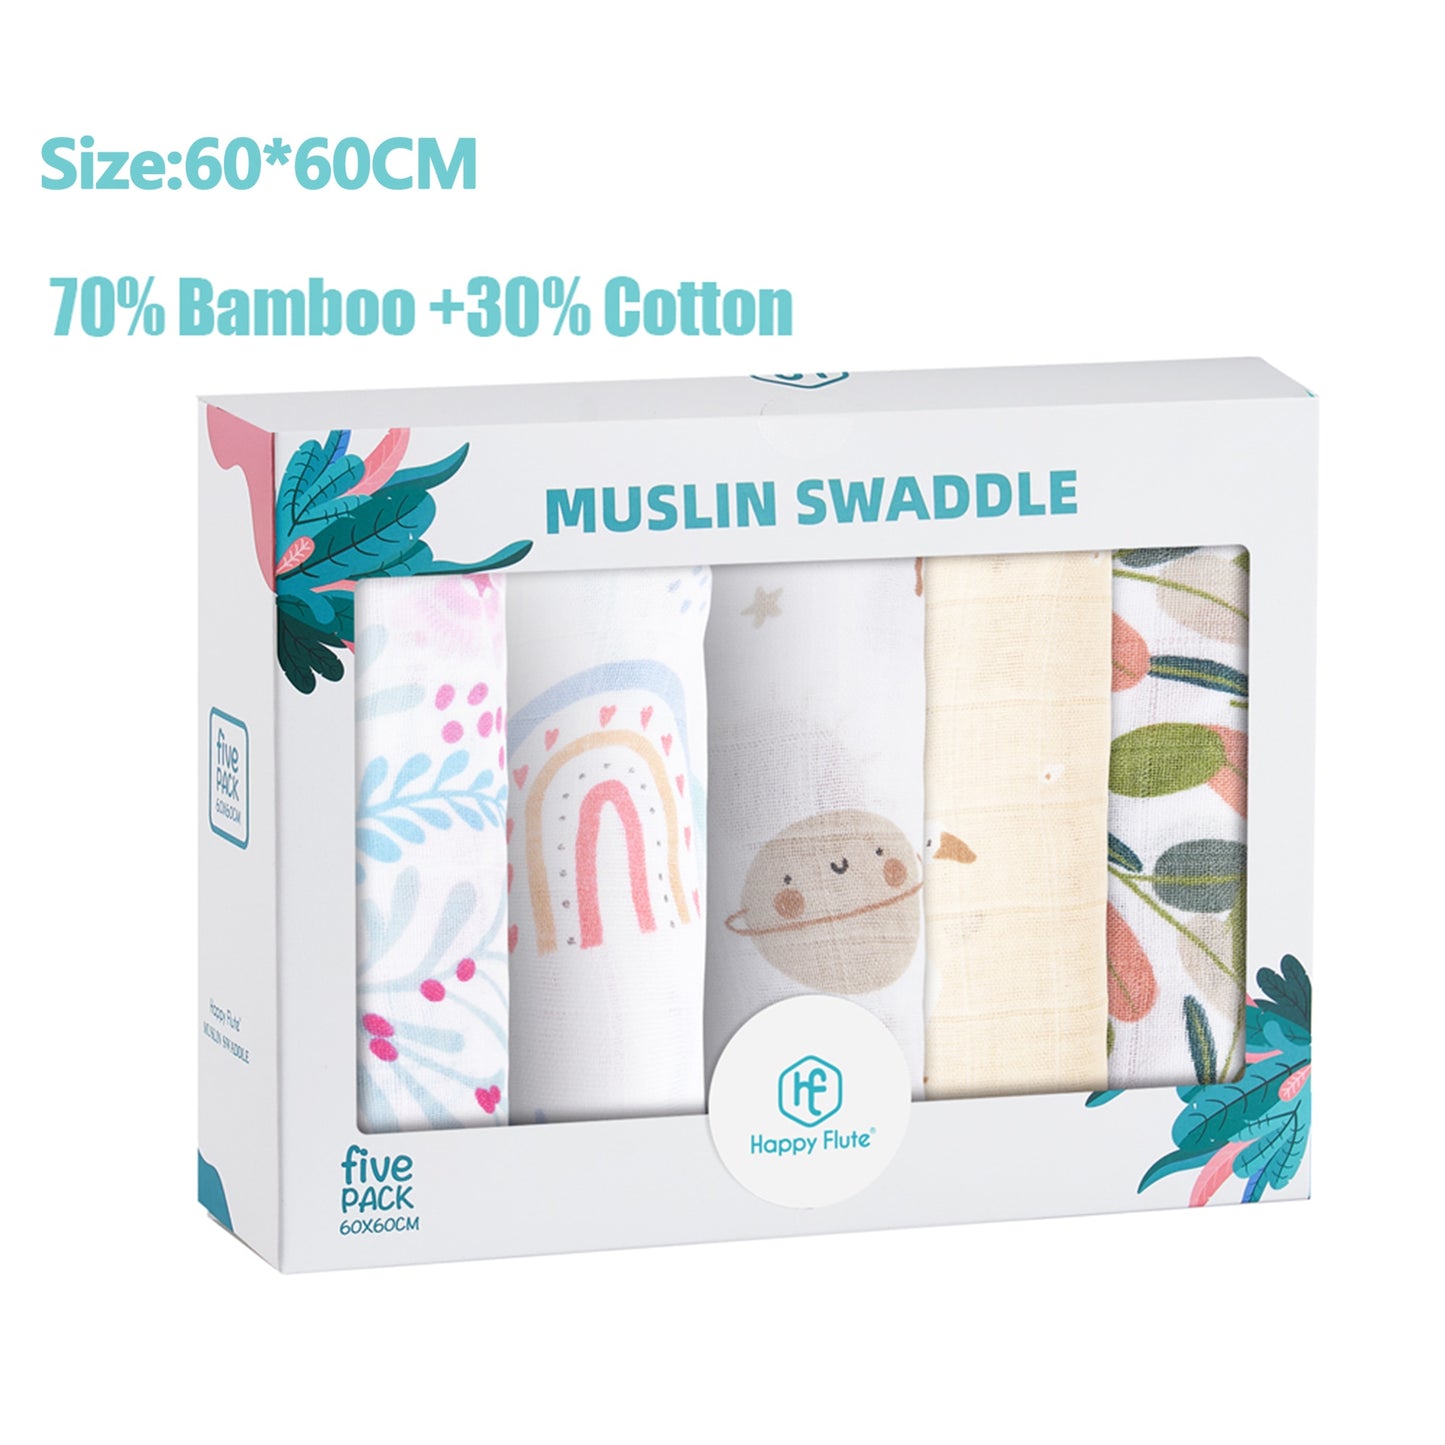 HappyFlute 5Pcs/set Muslin Swaddle Feeding Burp Cloth Newborn Soft Cotton Baby Blanket 60*60cm